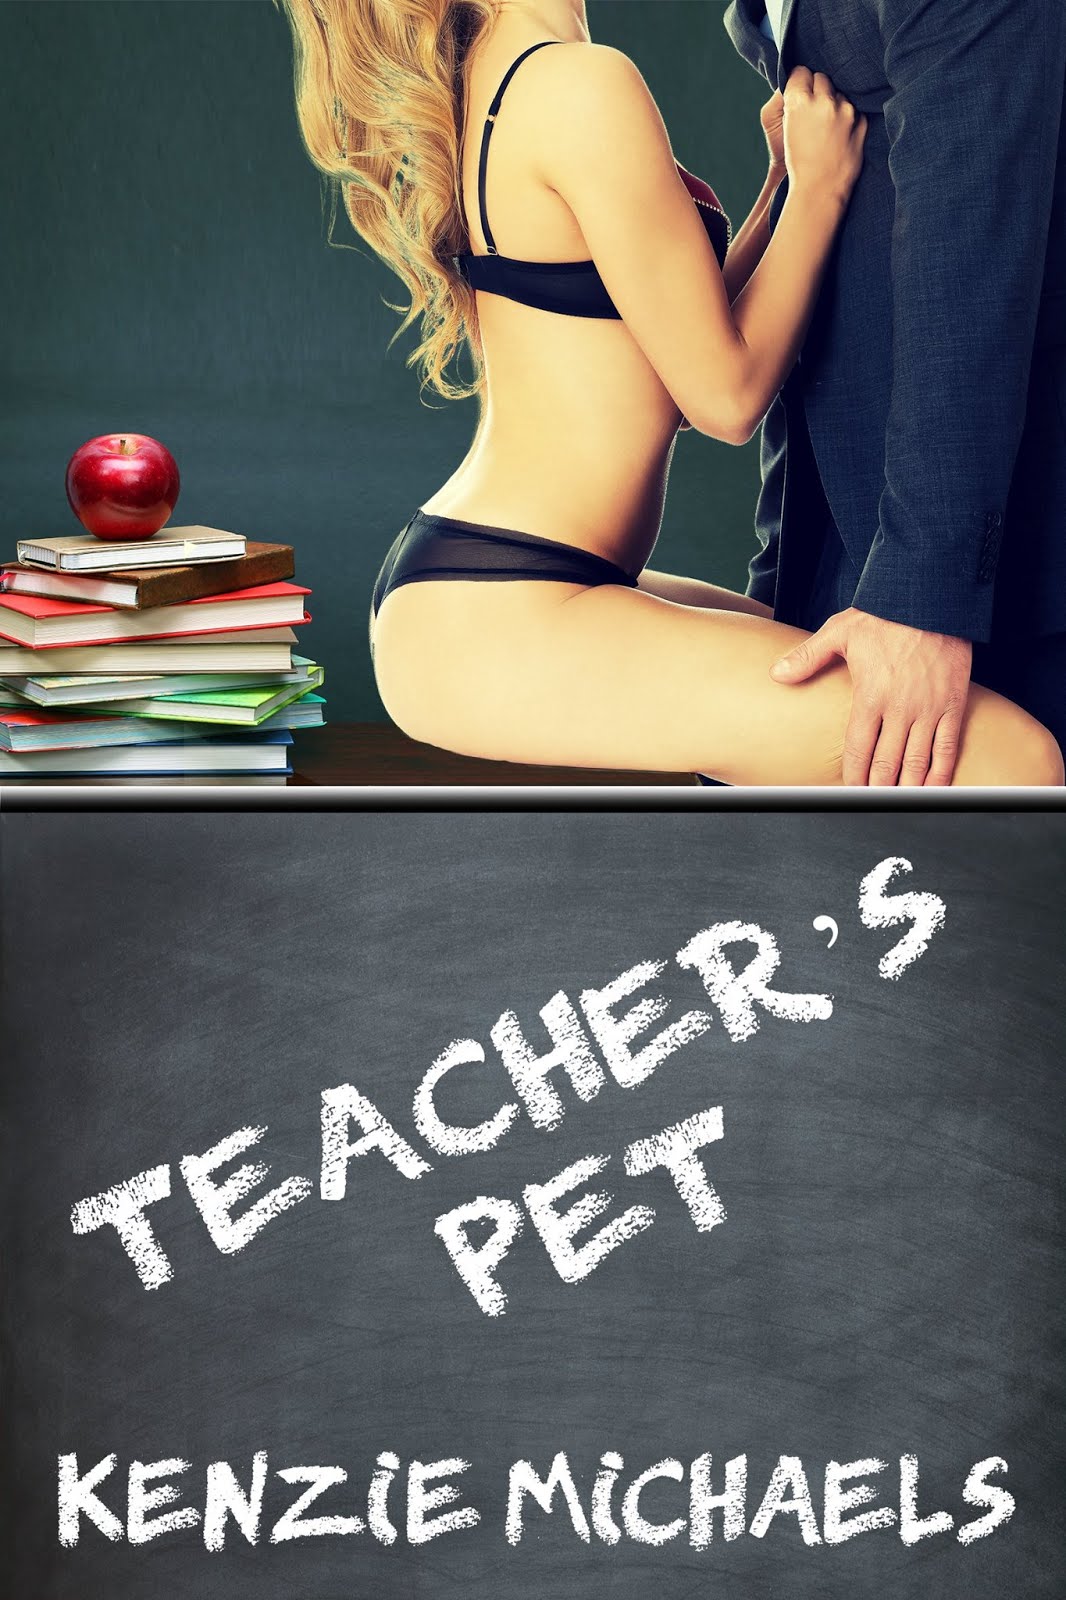 New Teacher's Pet Cover!